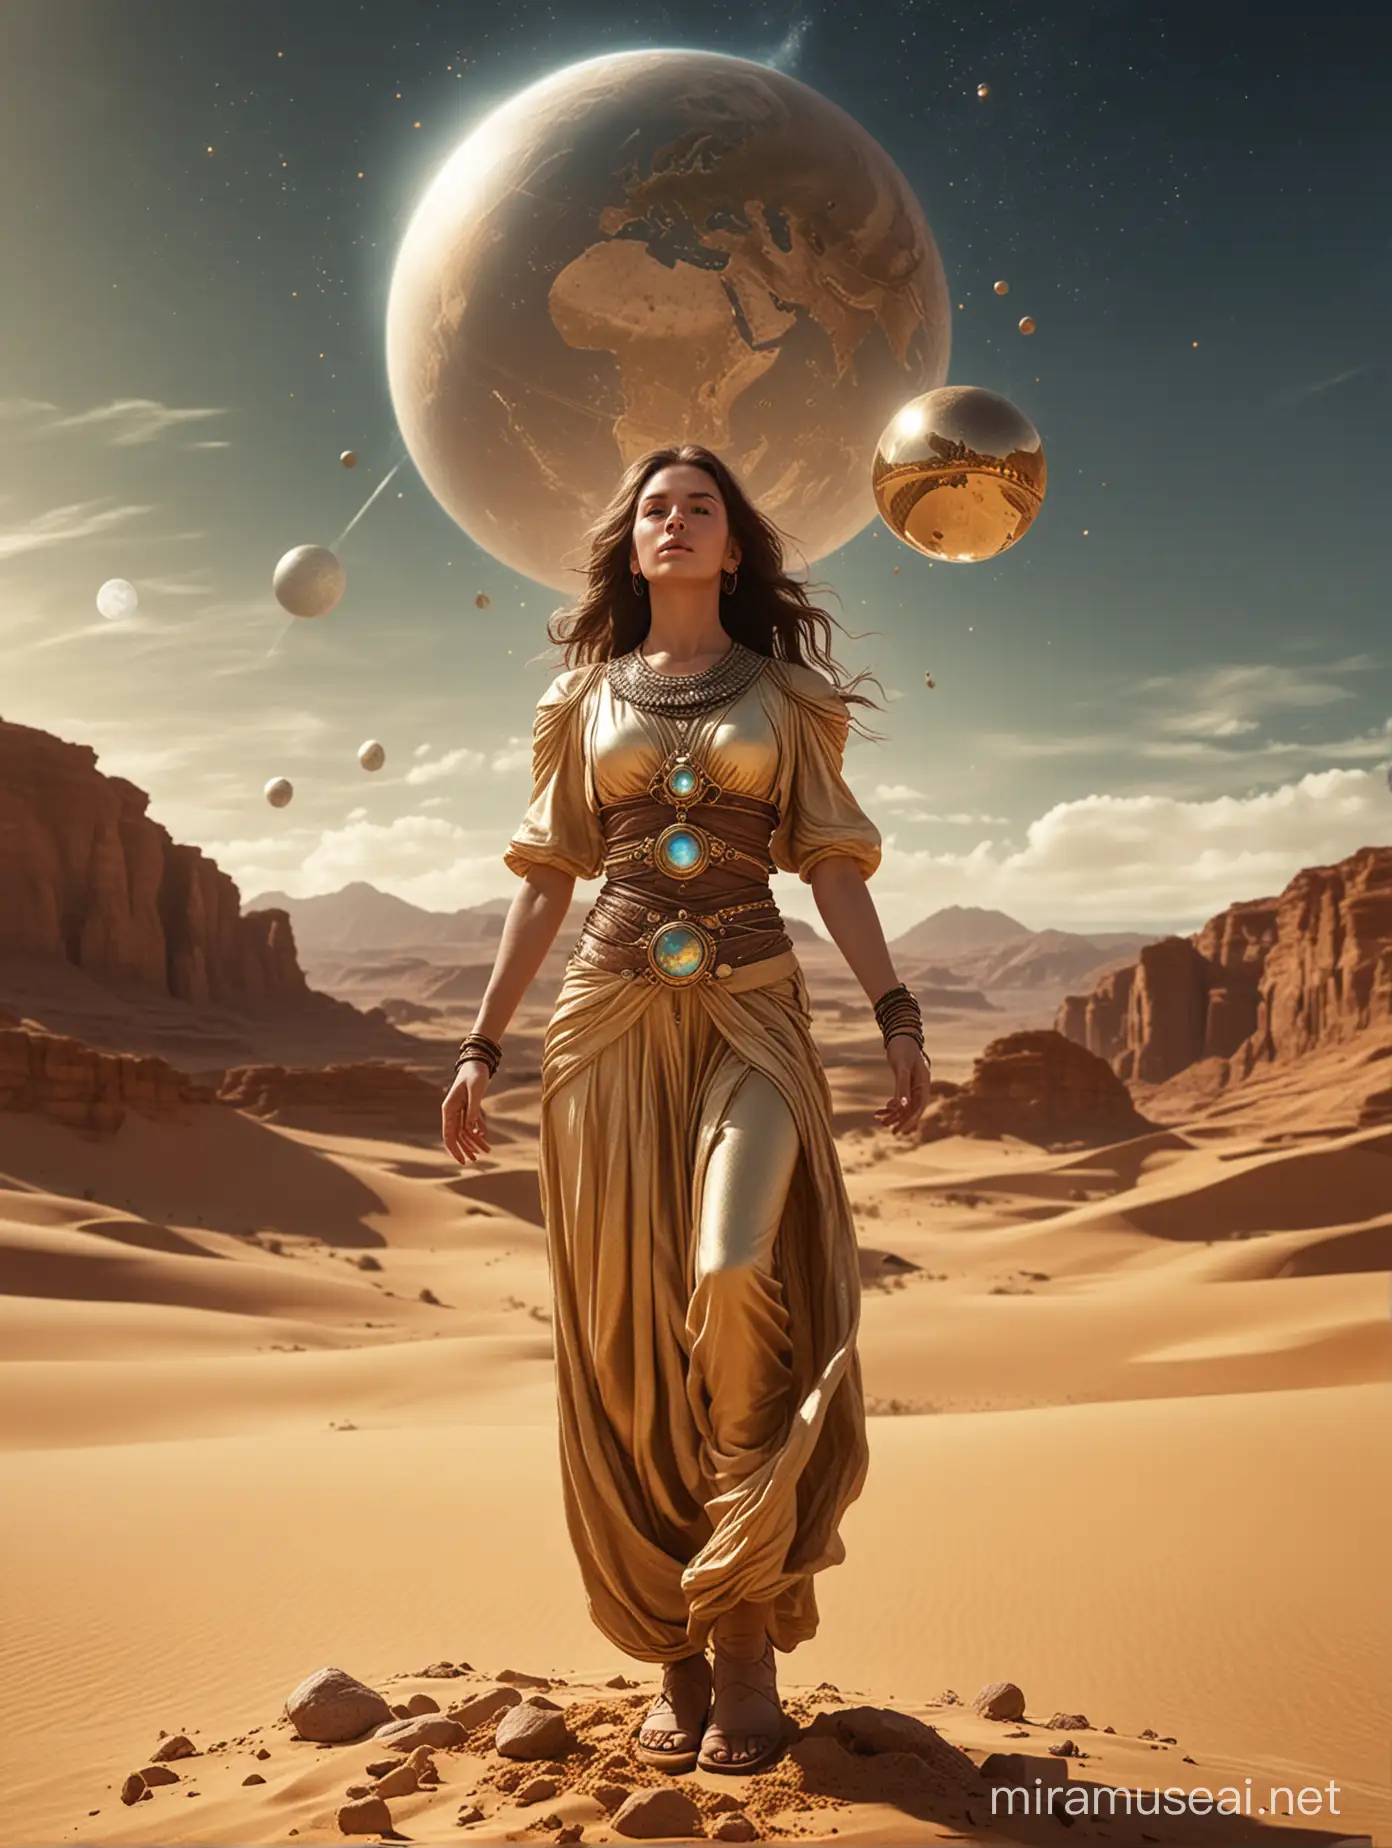 Aline Woman Holding Earth Globe in High Fantasy Desert Adventure